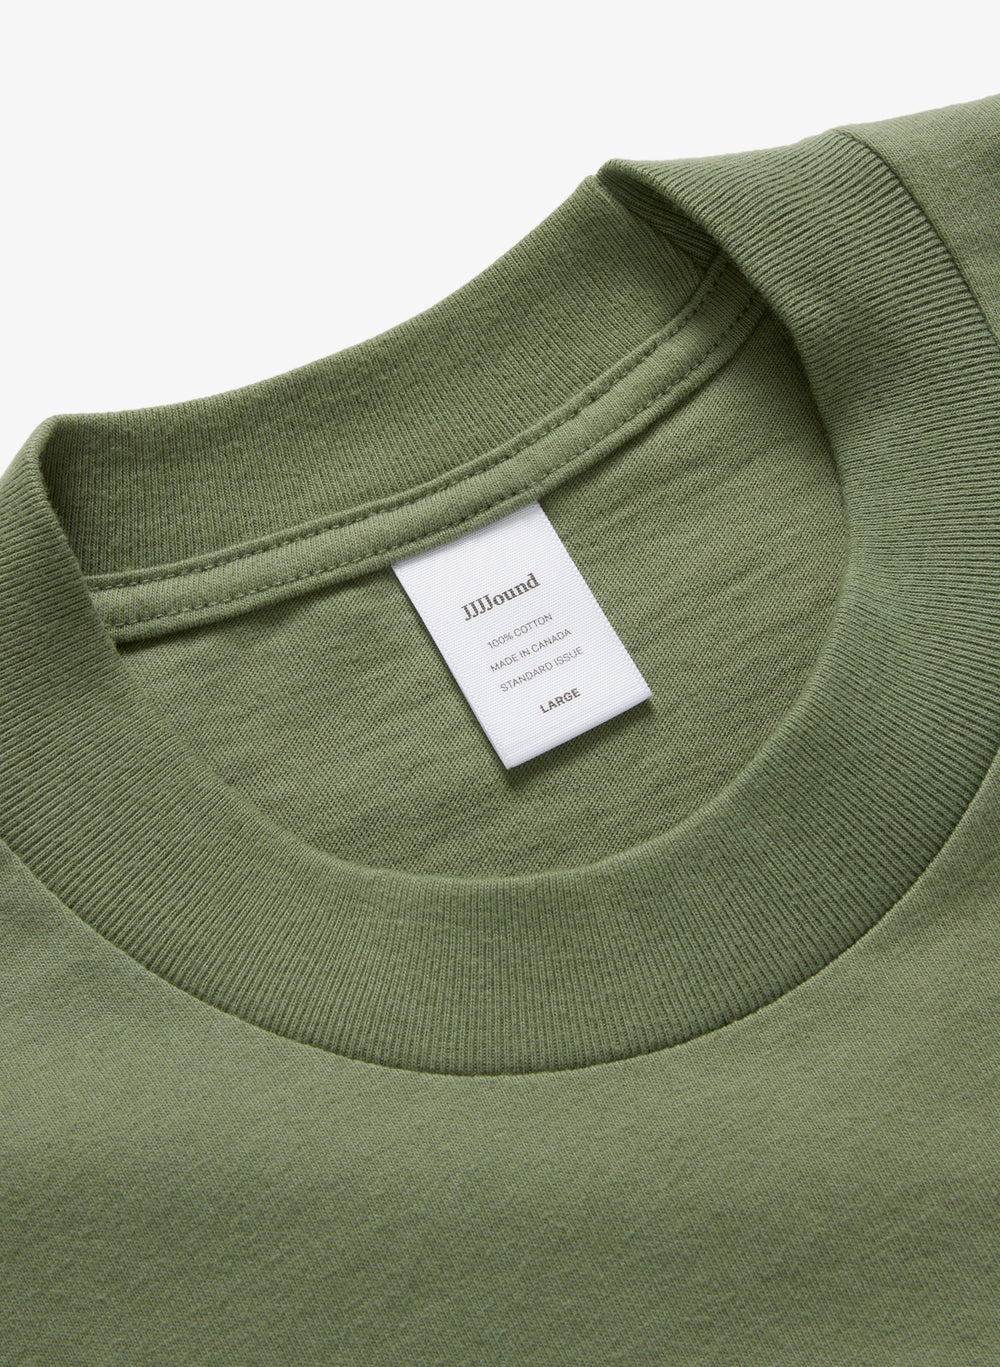 J90 T-Shirt - Olive